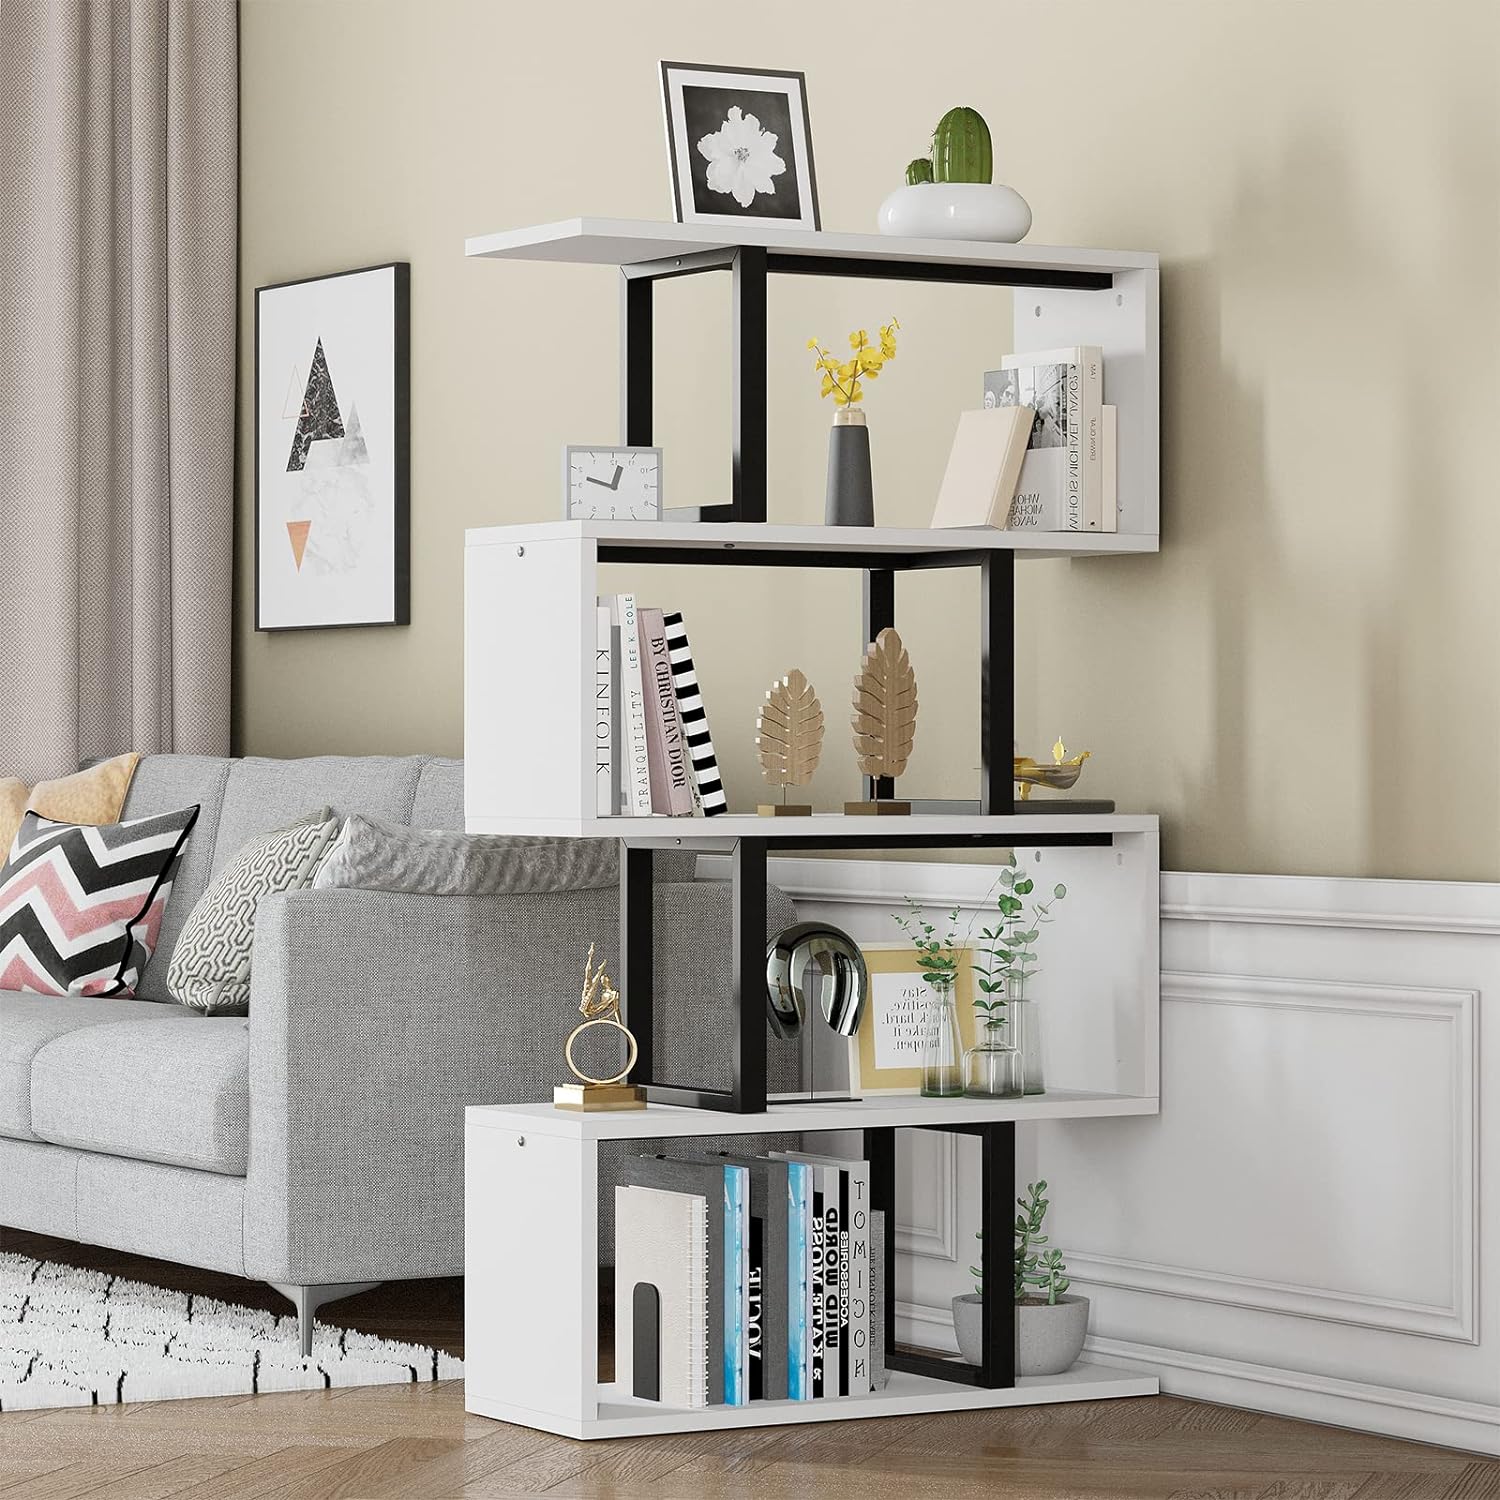 YITAHOME 5 Tiers Bookshelf, Modern S-Shaped Z-Shelf Style Bookshelves